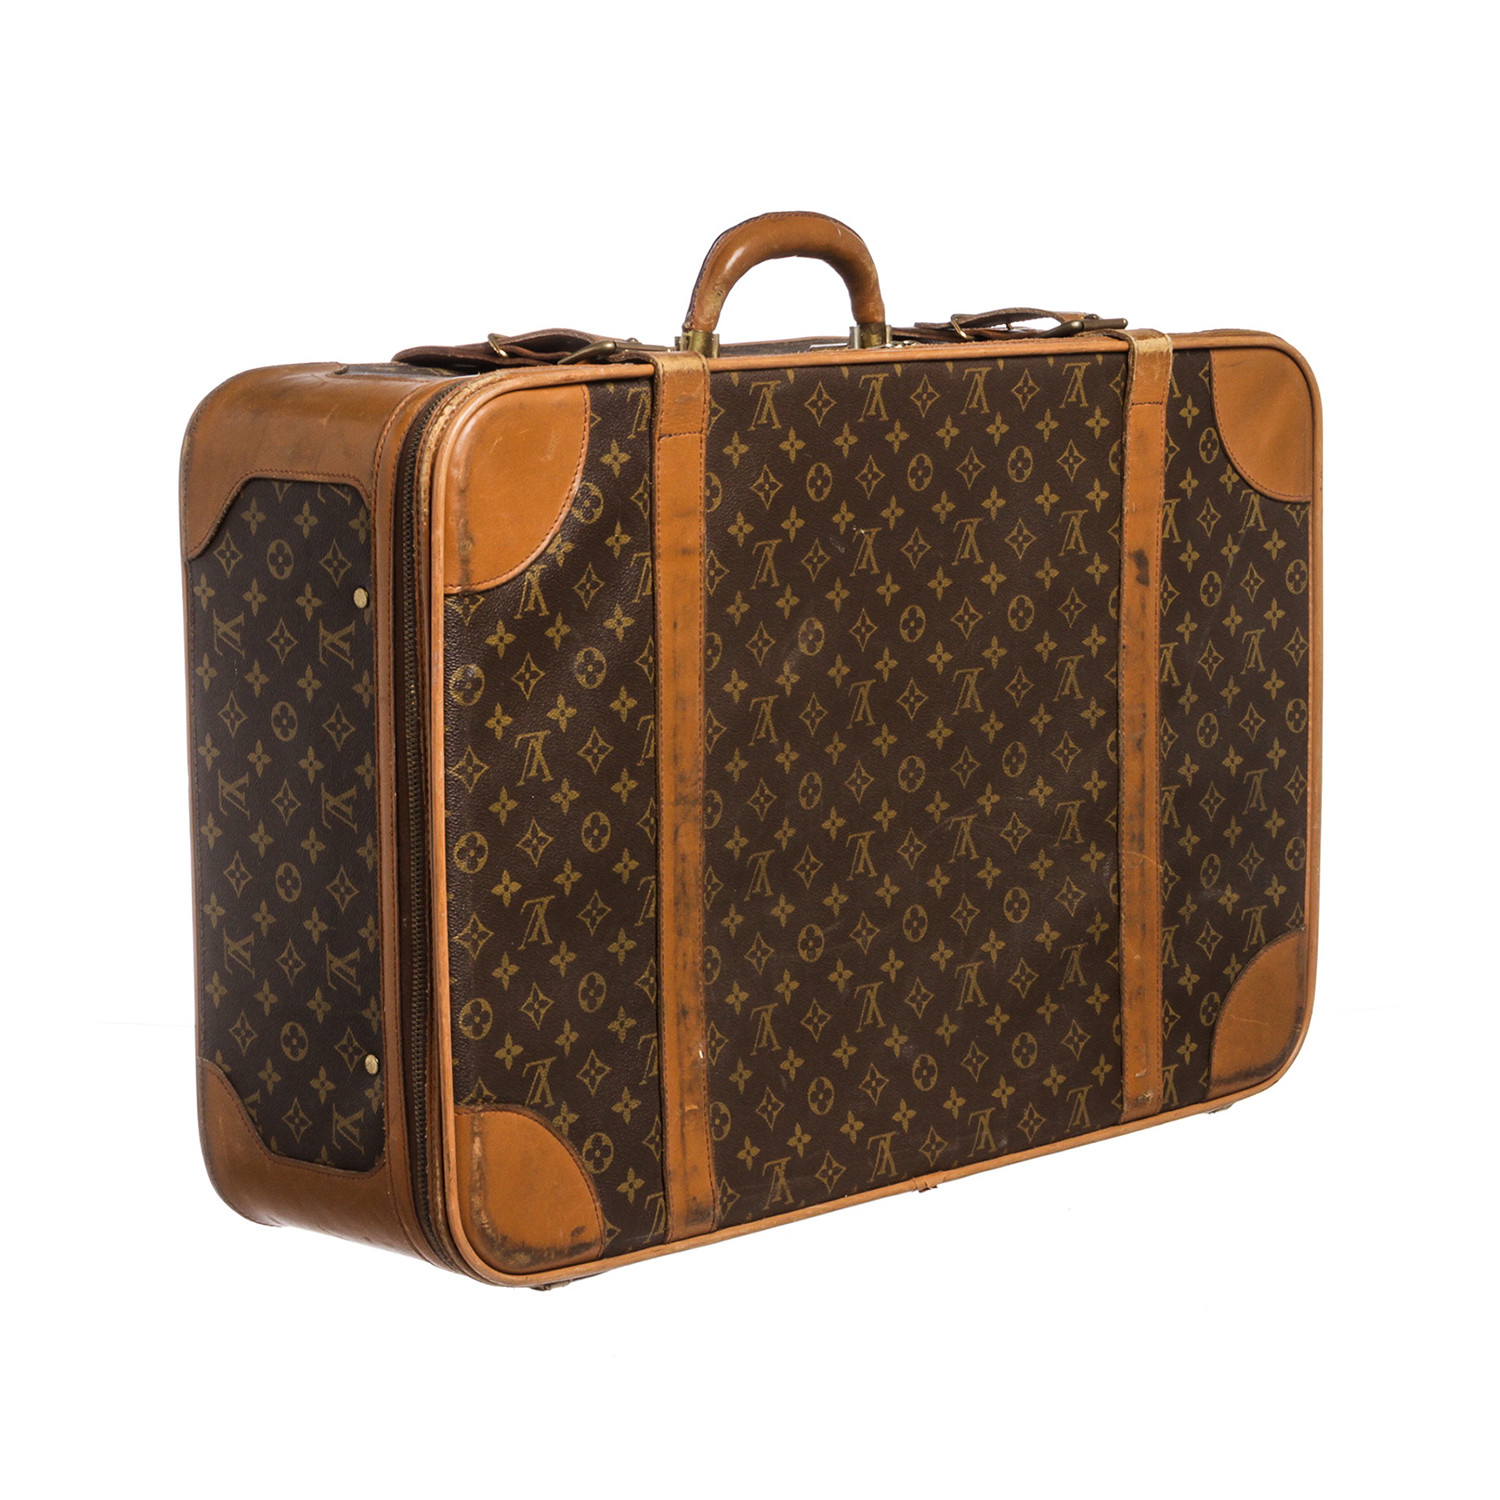  Louis  Vuitton  Monogram Vintage Suitcase Luggage  Pre 